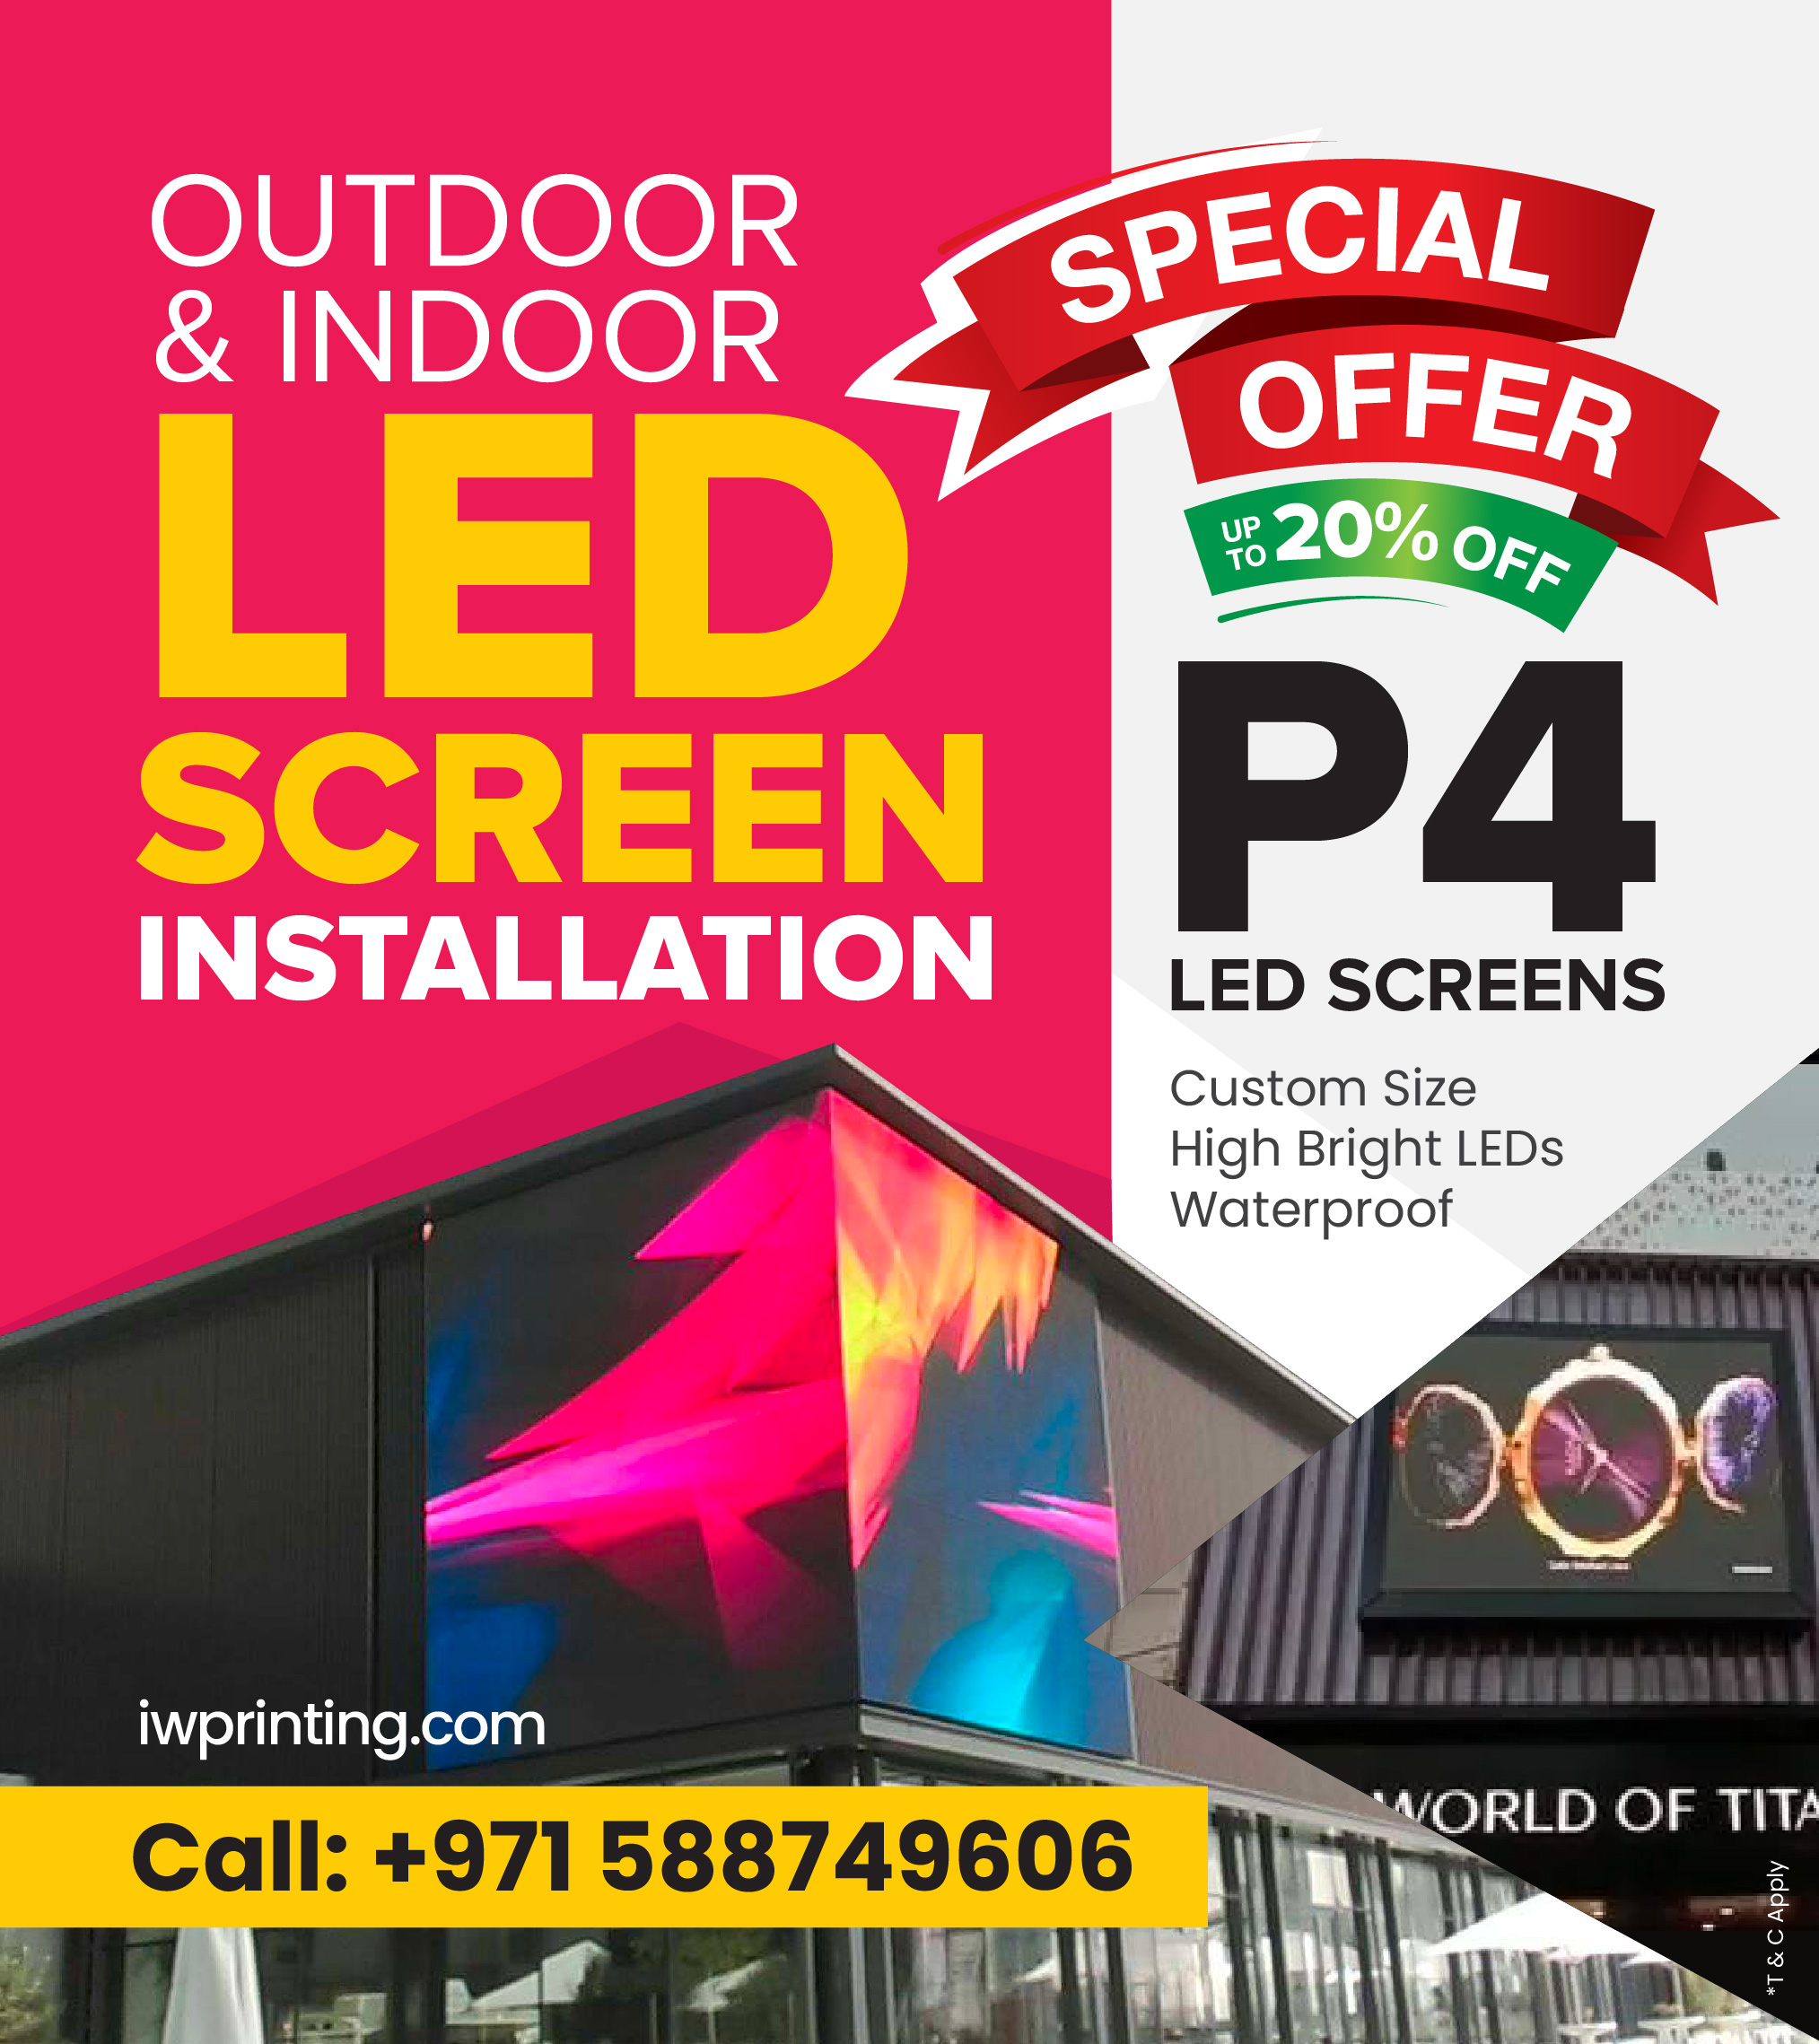 Best LED Screen Installation in Dubai